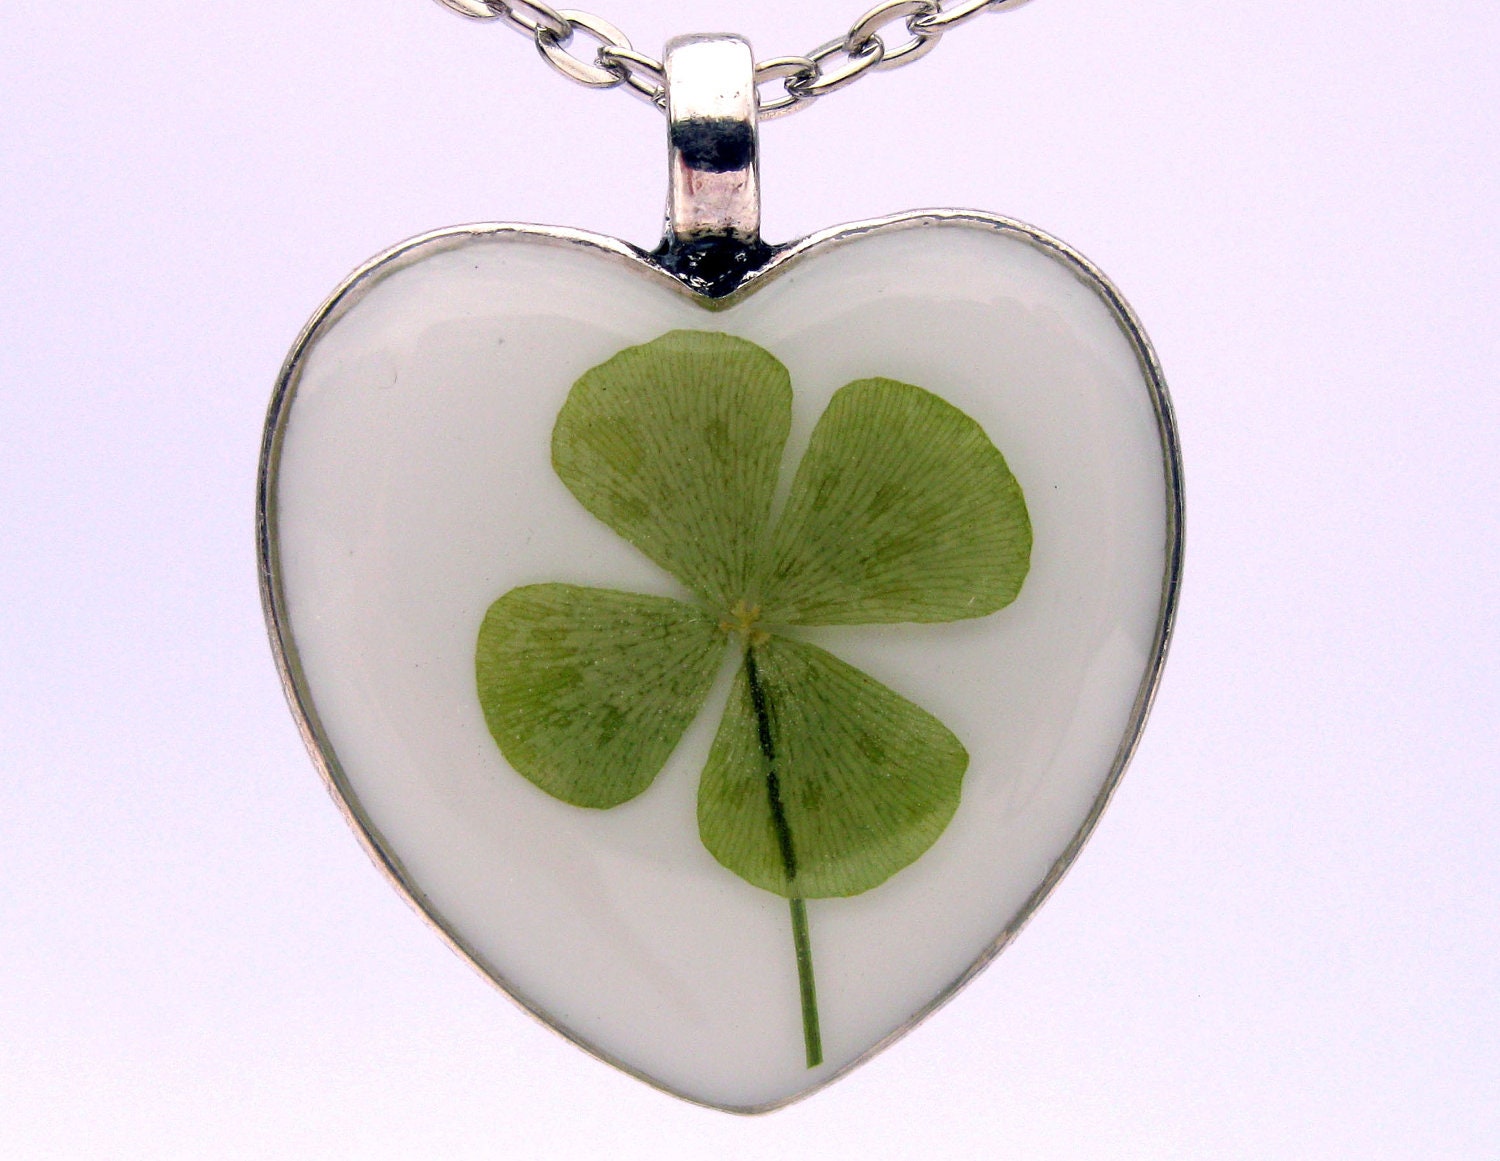 Real 4 leaf clover resin pendant necklace -  Clover encased in resin and preserved forever